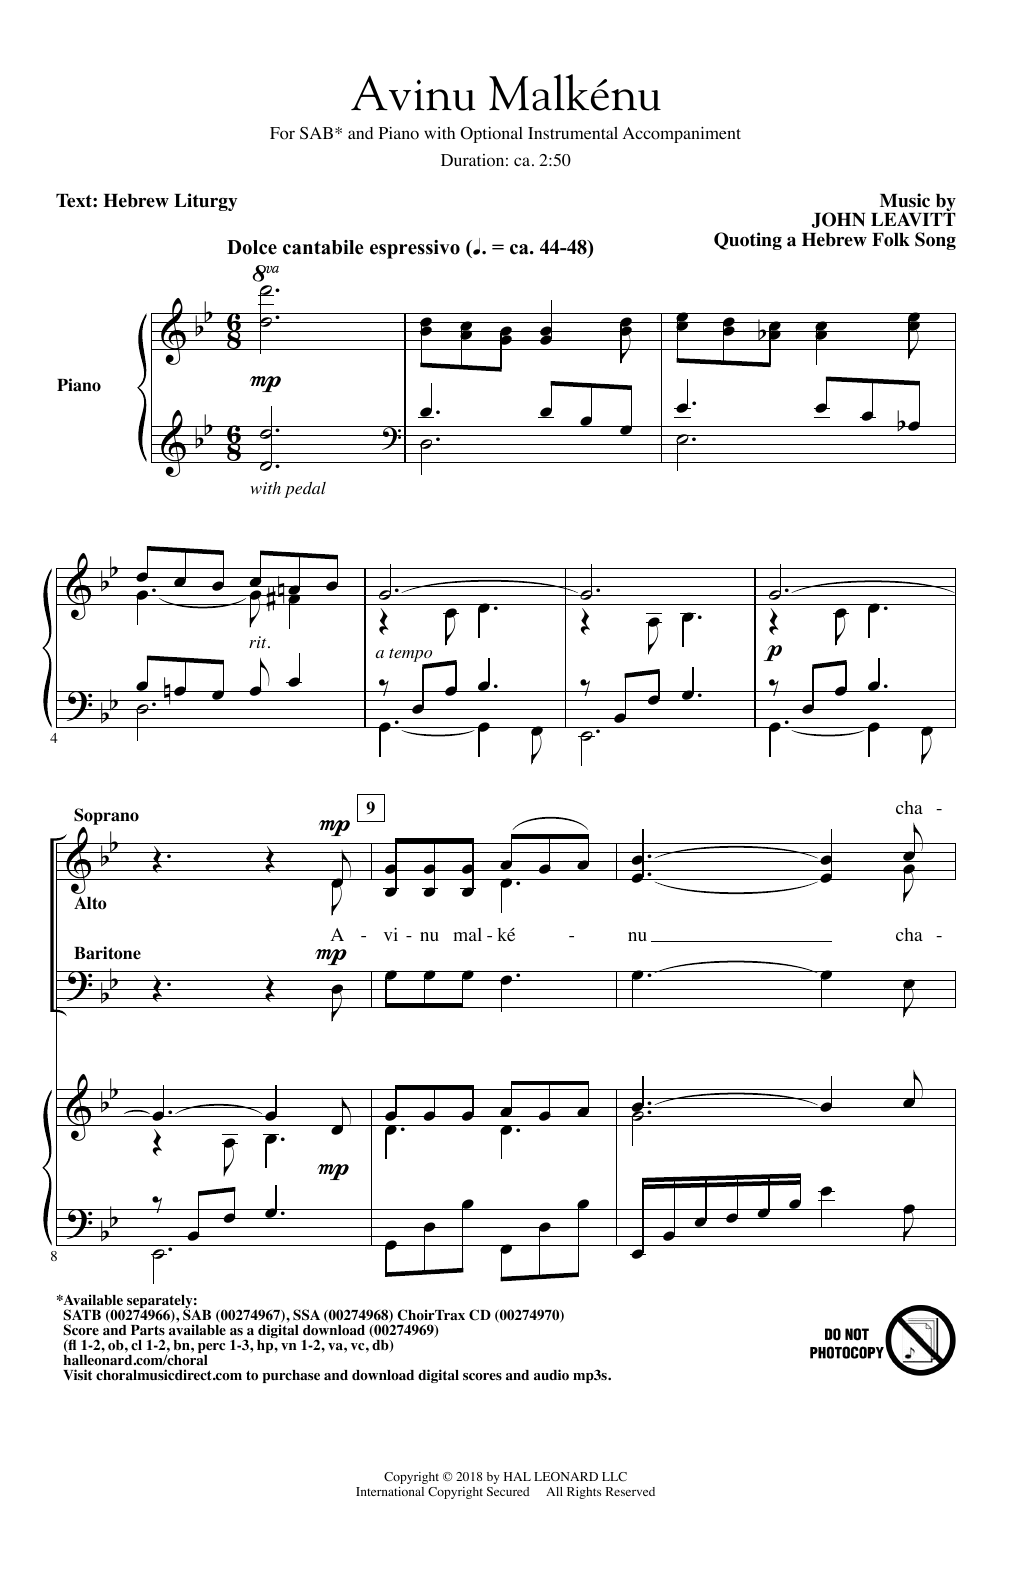 Download John Leavitt Avinu Malkenu Sheet Music and learn how to play SATB Choir PDF digital score in minutes